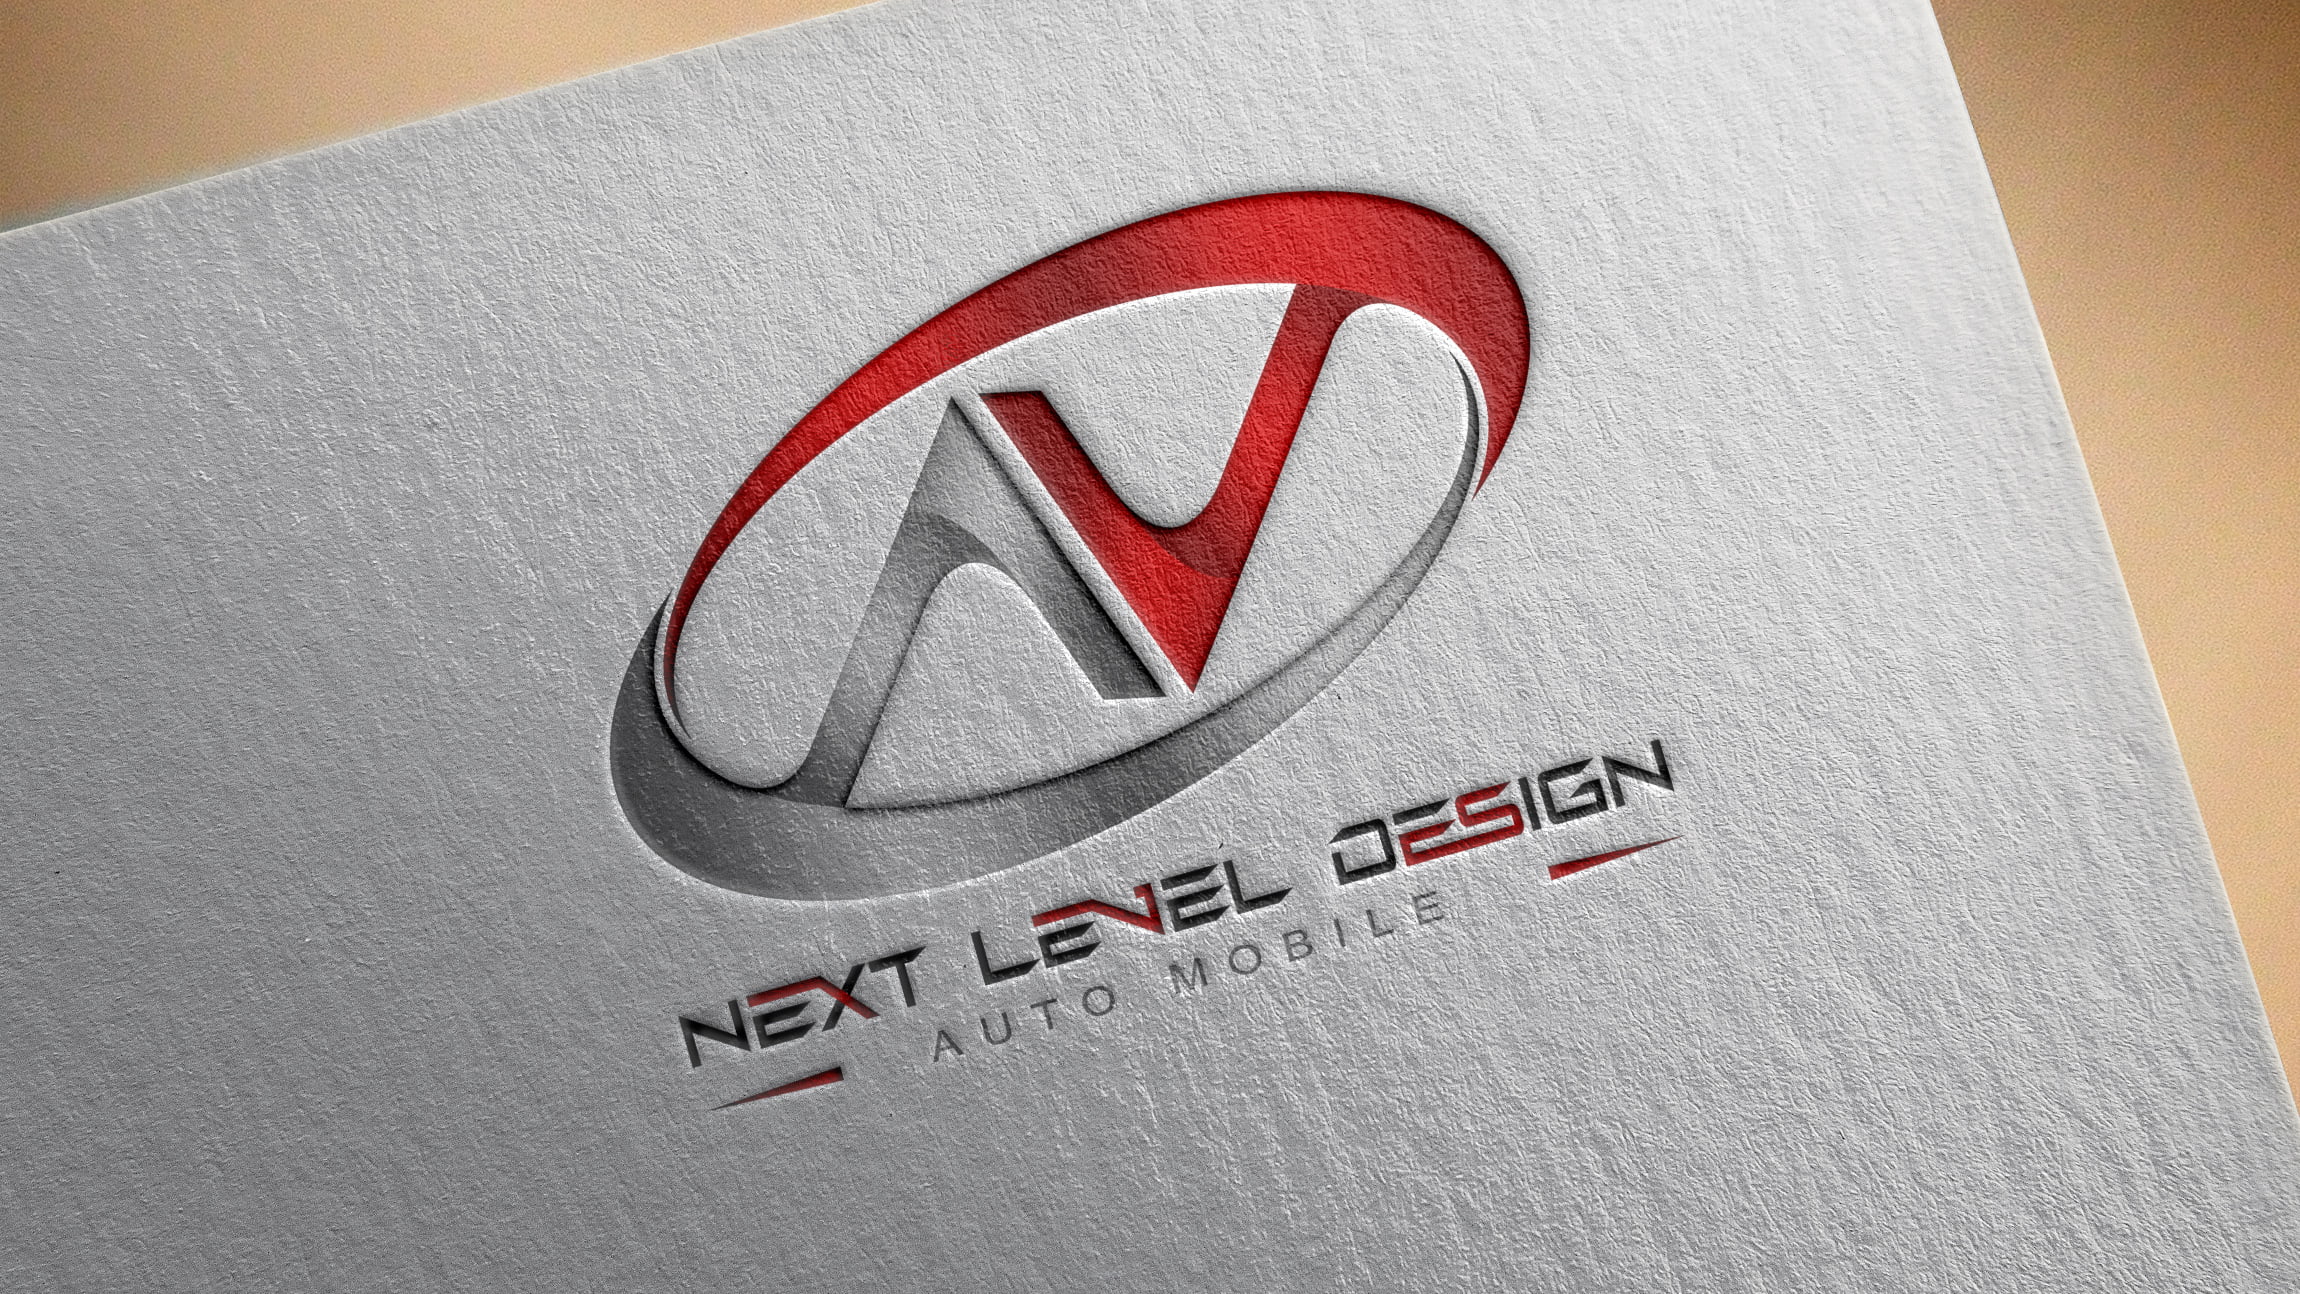 Next Level Logo Design